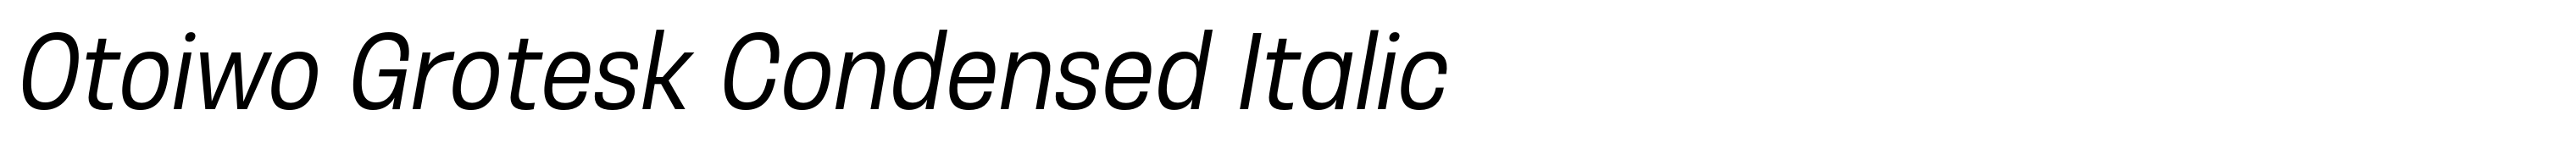 Otoiwo Grotesk Condensed Italic